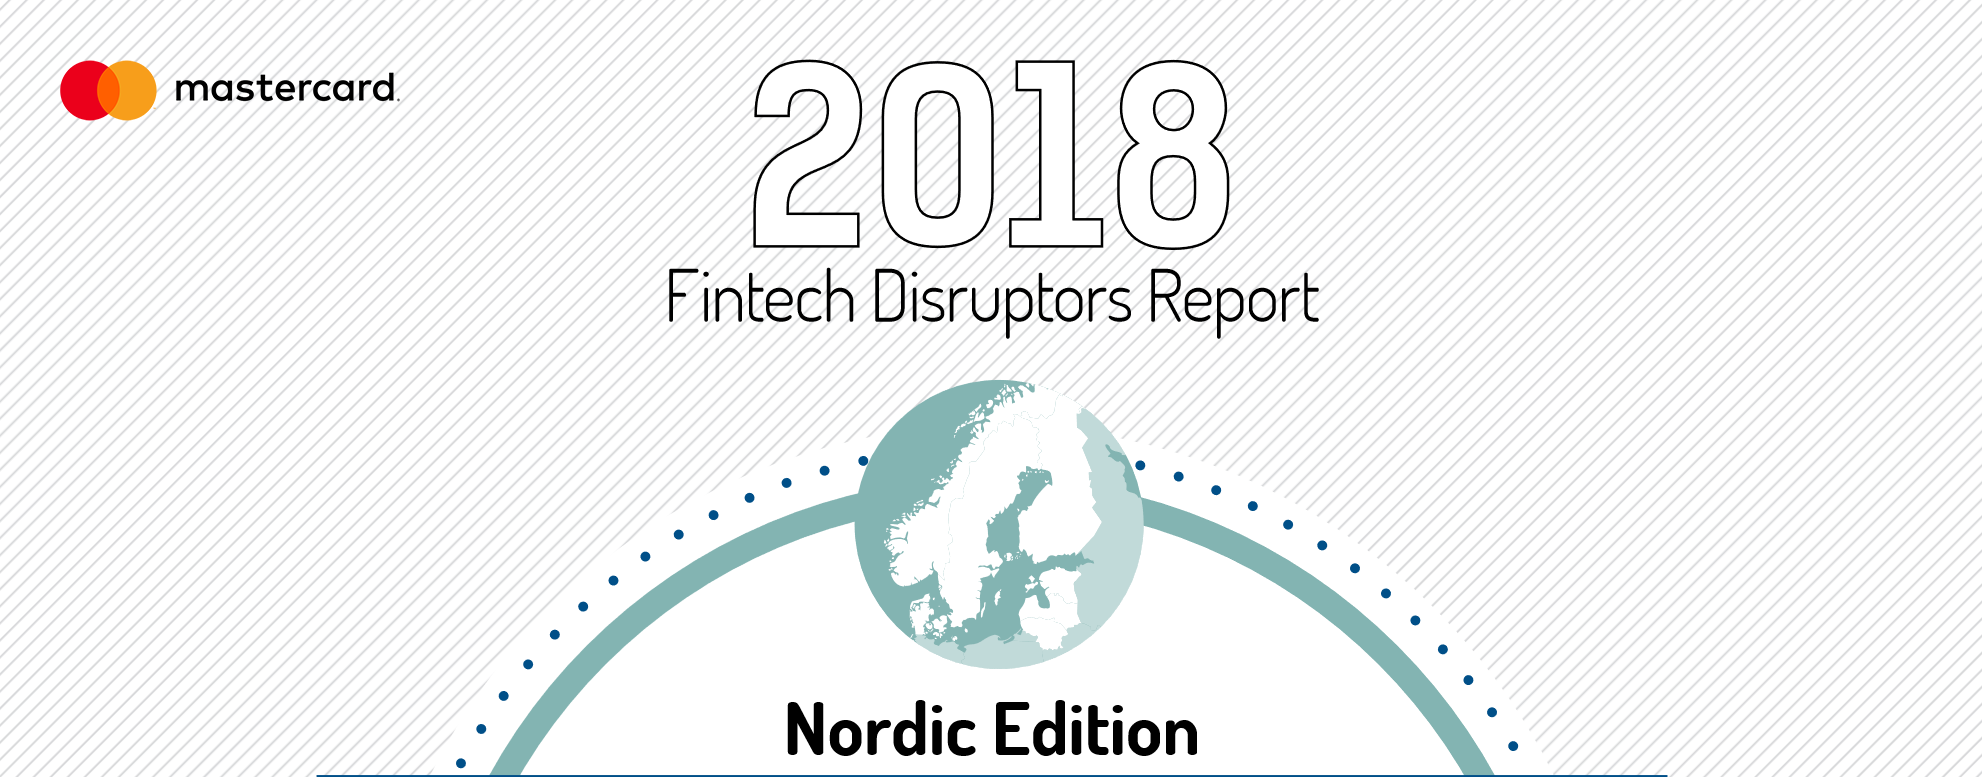 Fintech disrupt report 2018_LOGO